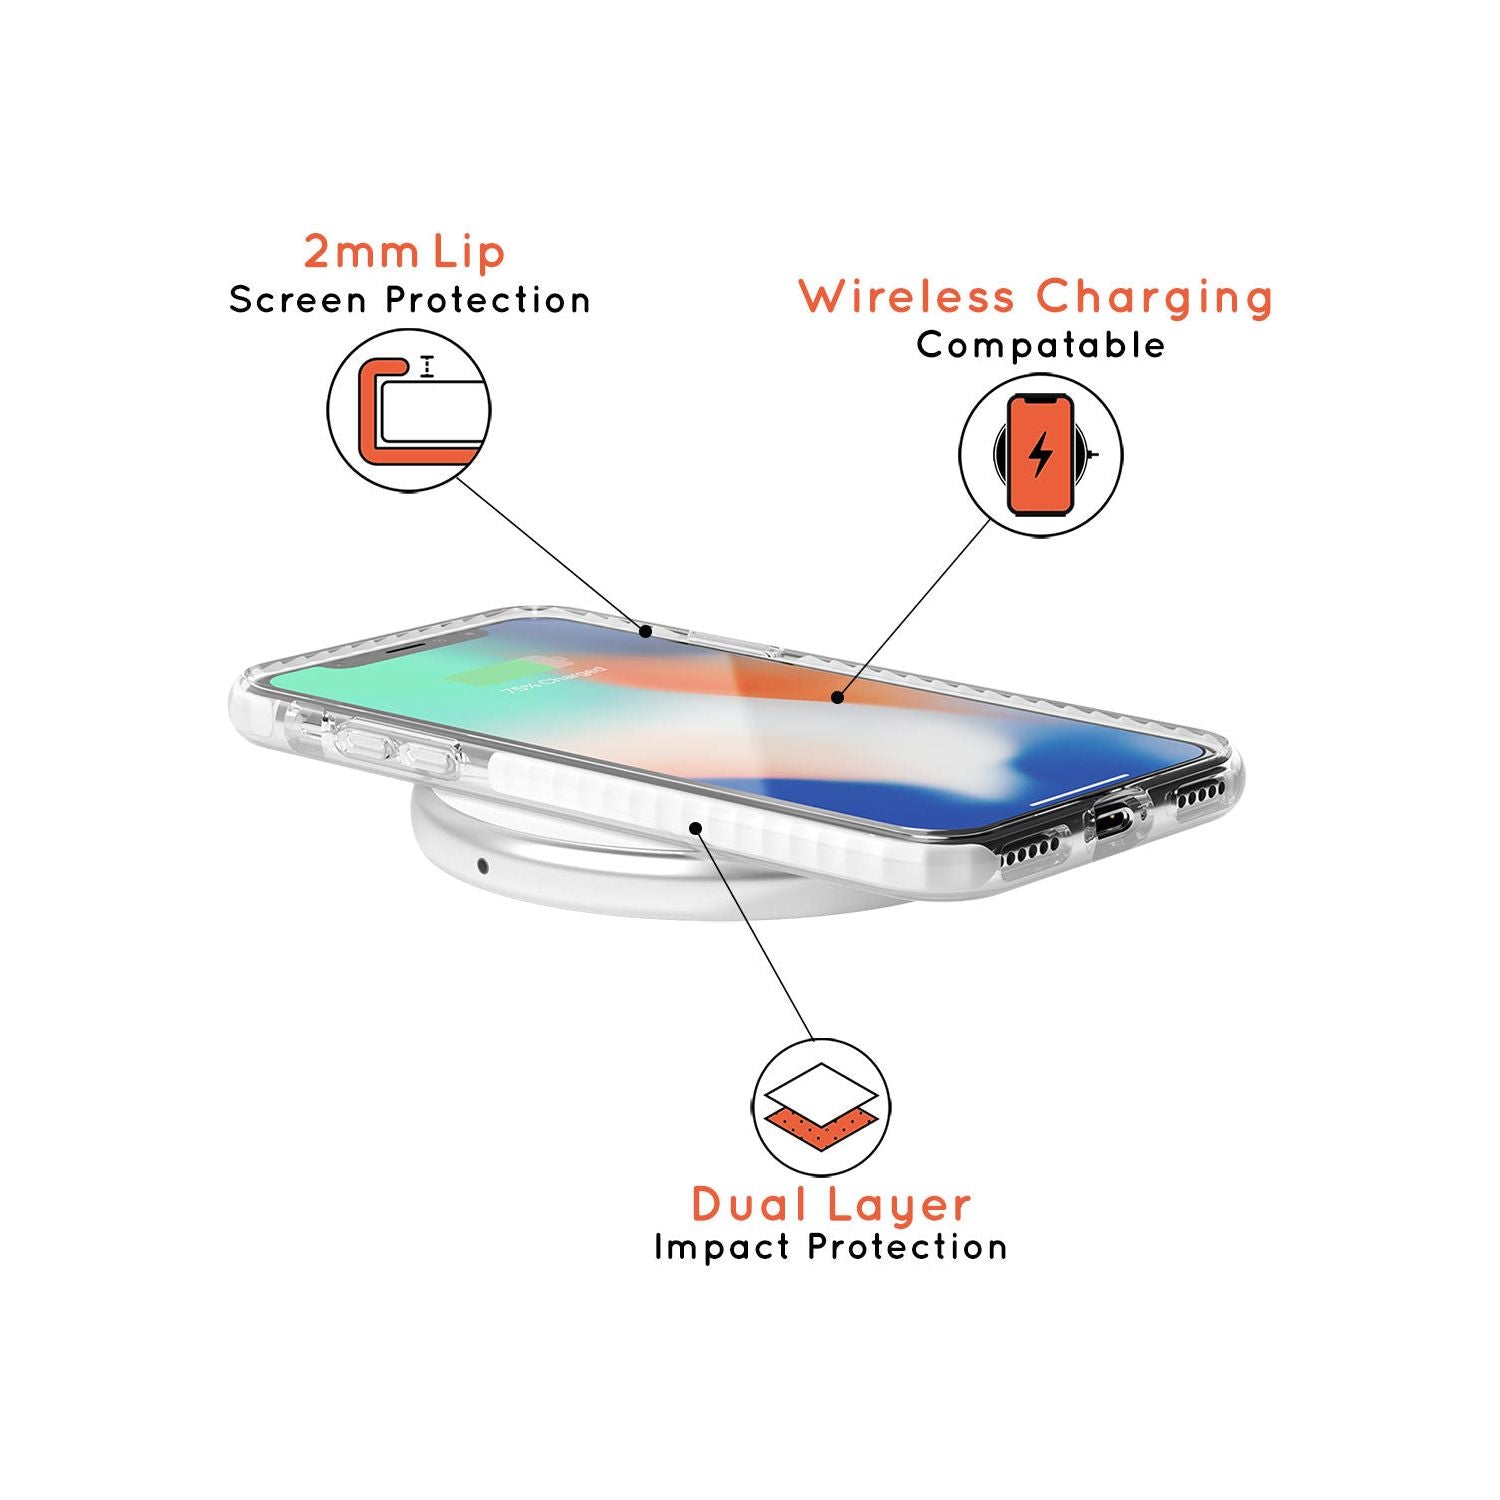 Large Rainbow Mandala Transparent Design Slim TPU Phone Case for iPhone 11 Pro Max